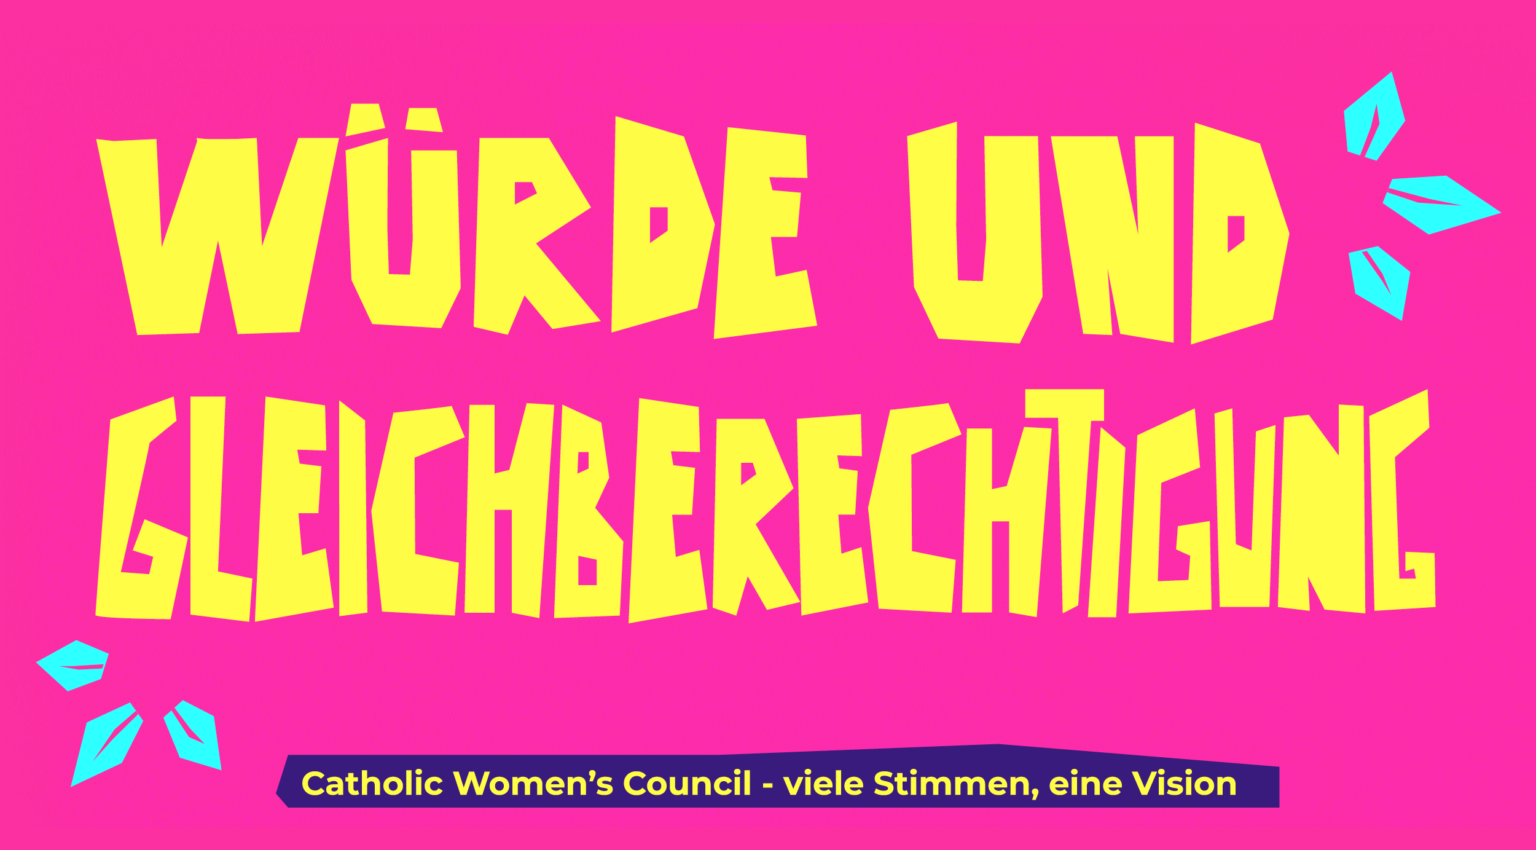 (c) Catholic Women's Council